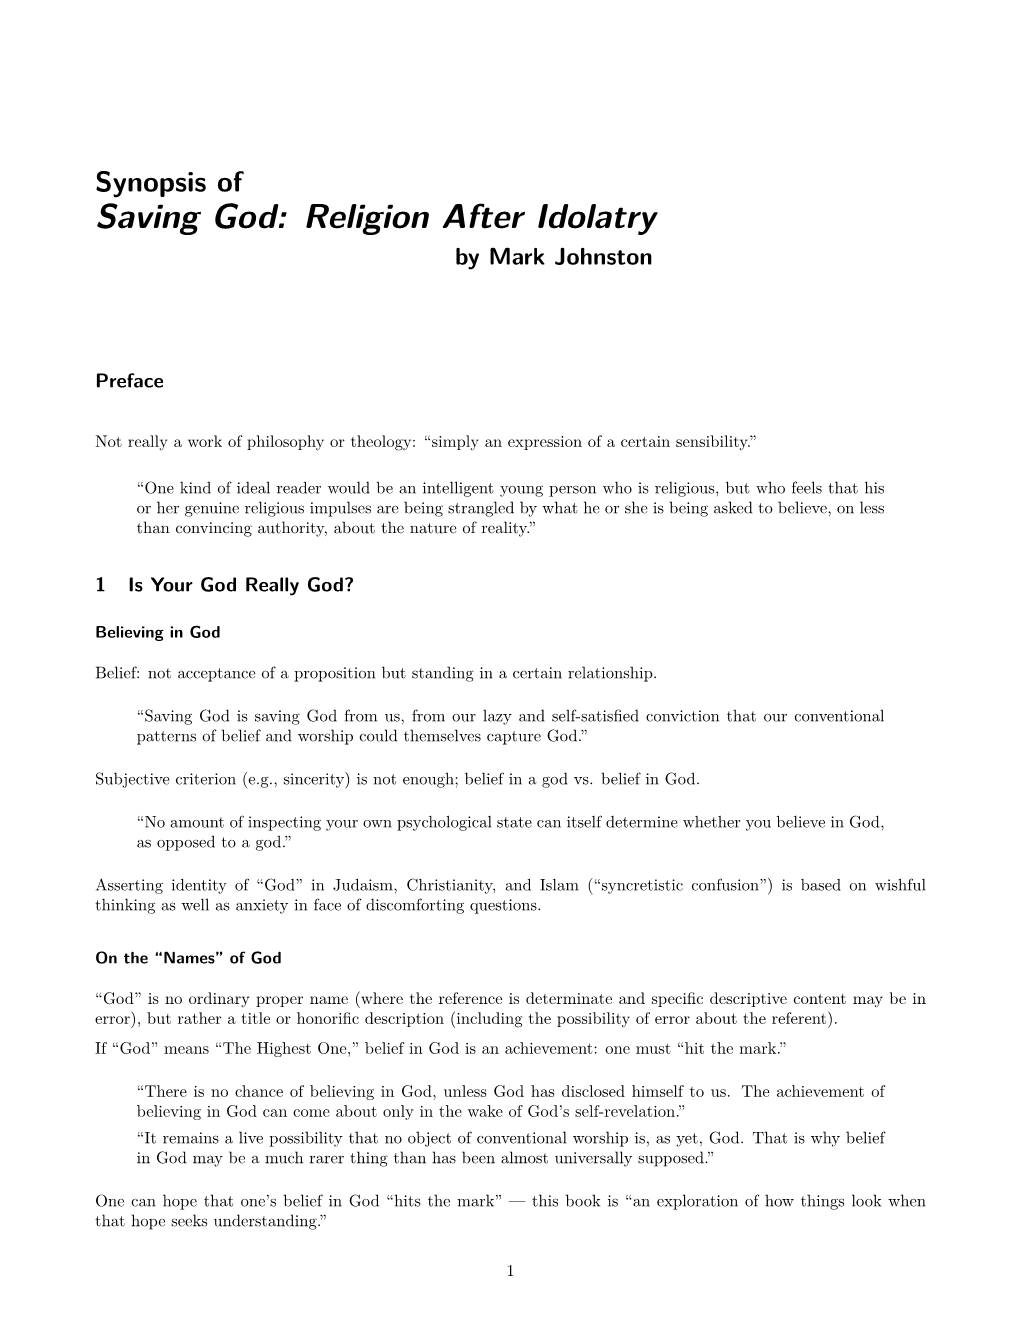 Saving God: Religion After Idolatry by Mark Johnston